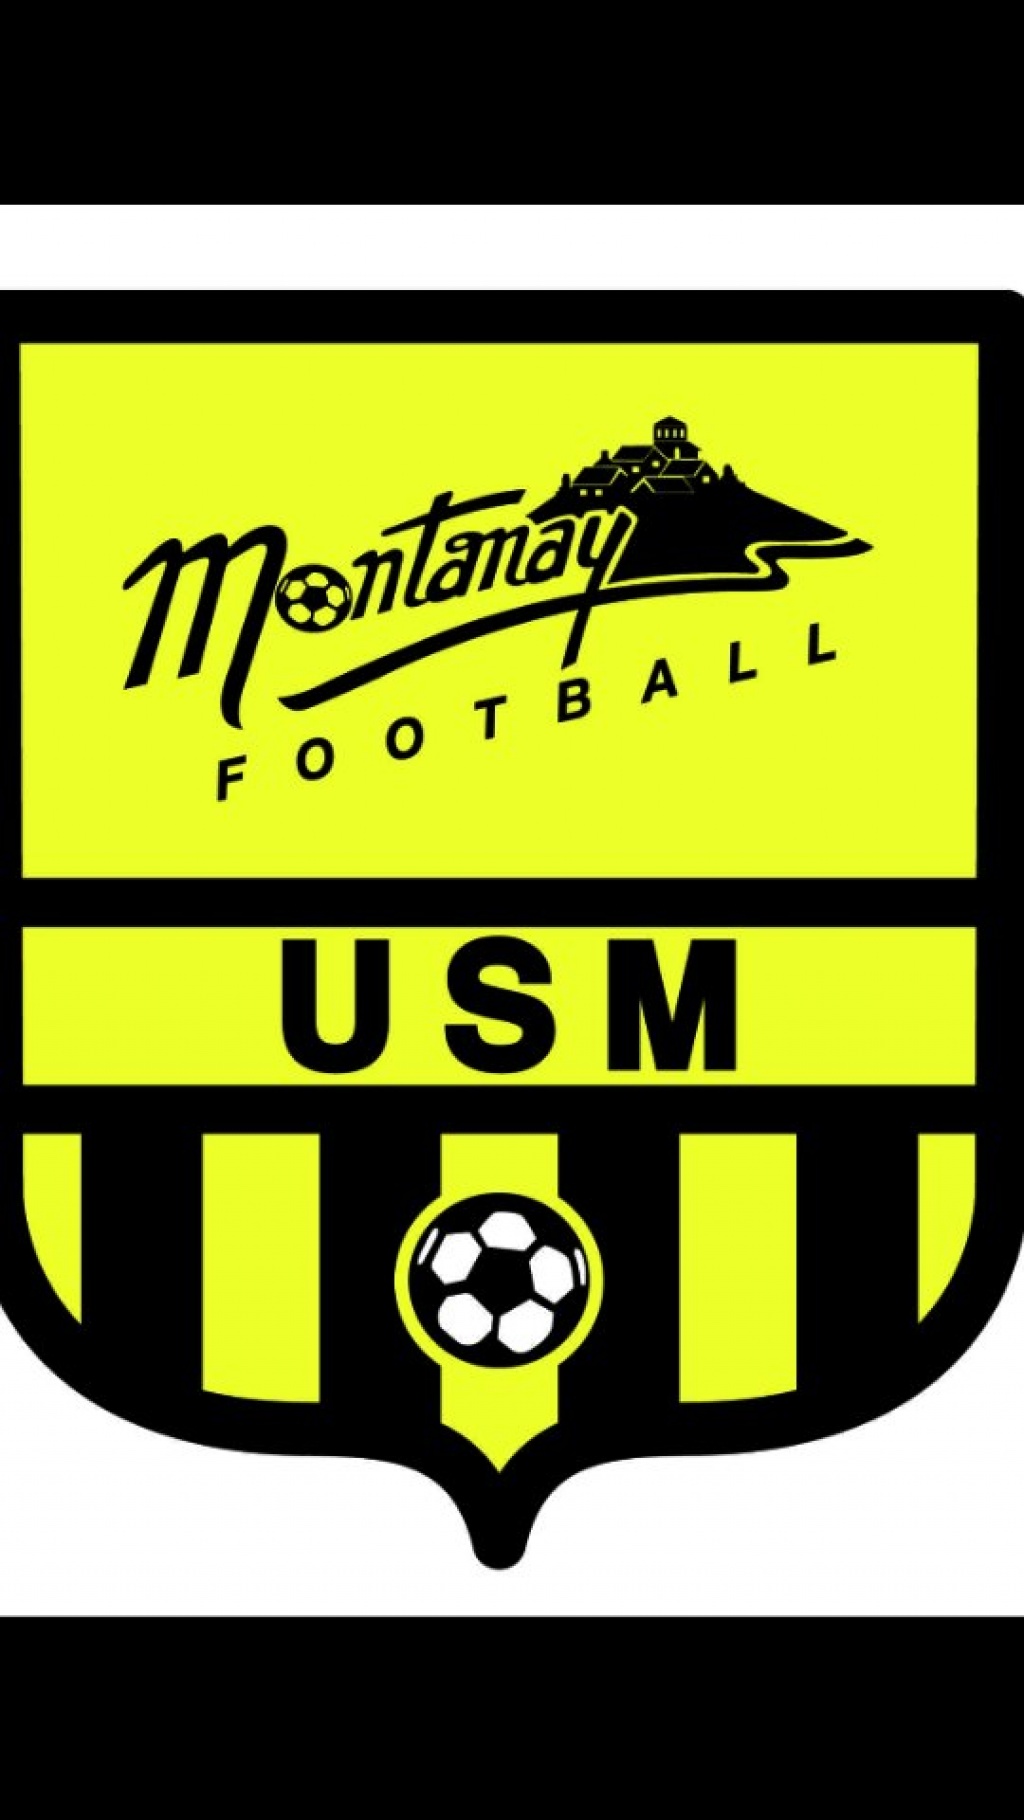 l'us Montanay football recherche 1 gardien de but  et 4 joueurs 